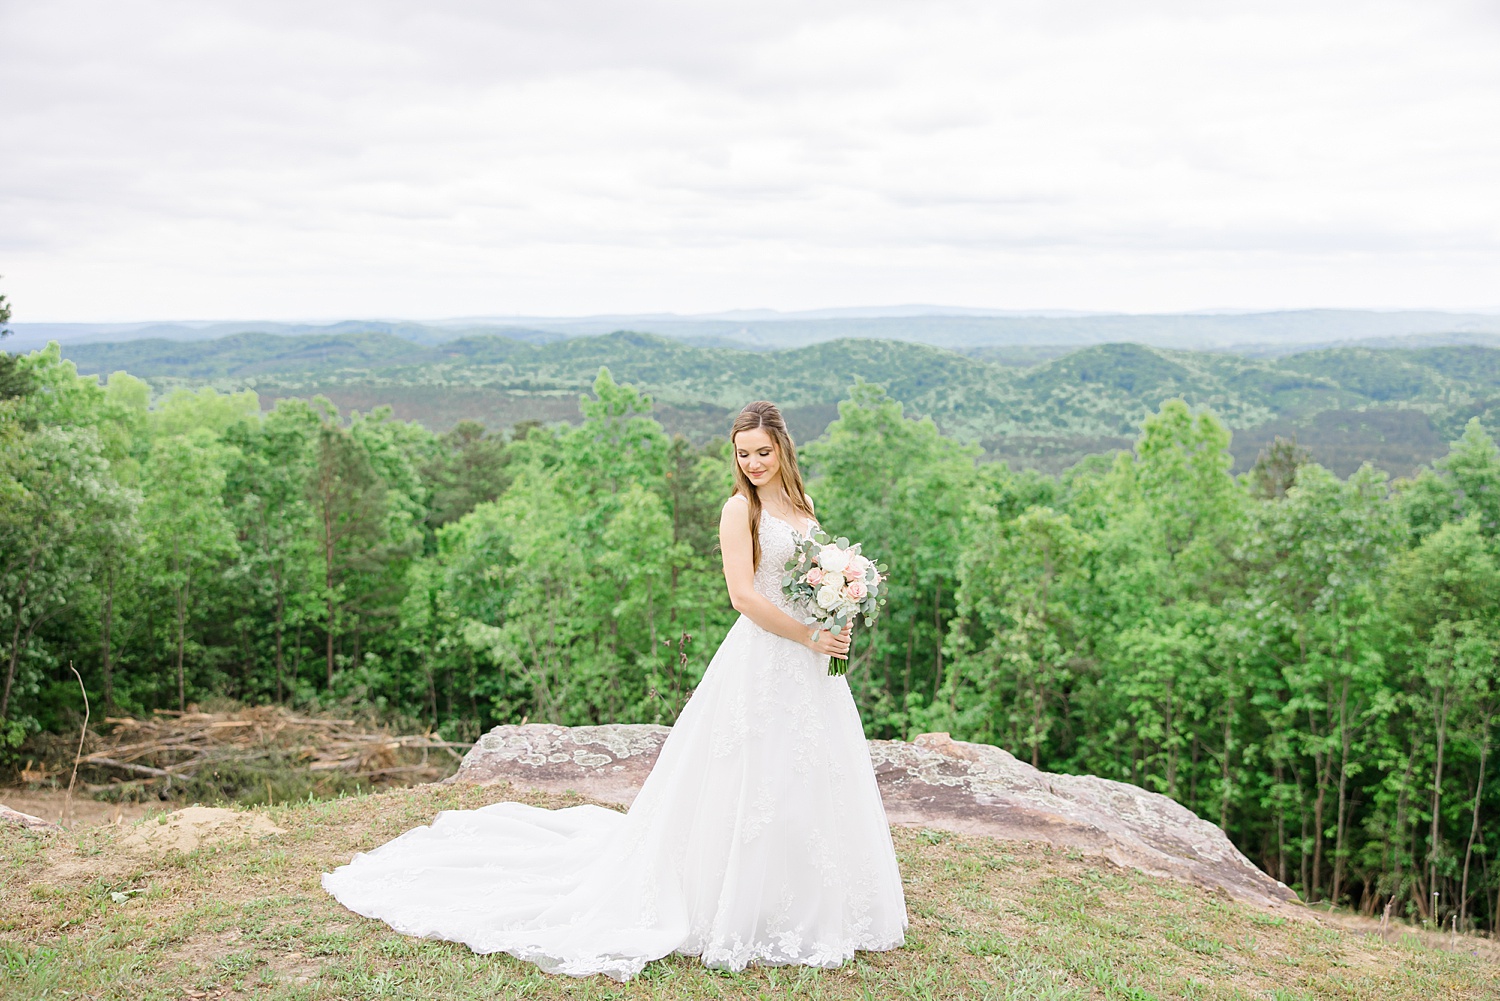 Birmingham AL wedding photographer captures bride on hilltop with a stunning natural landscape 